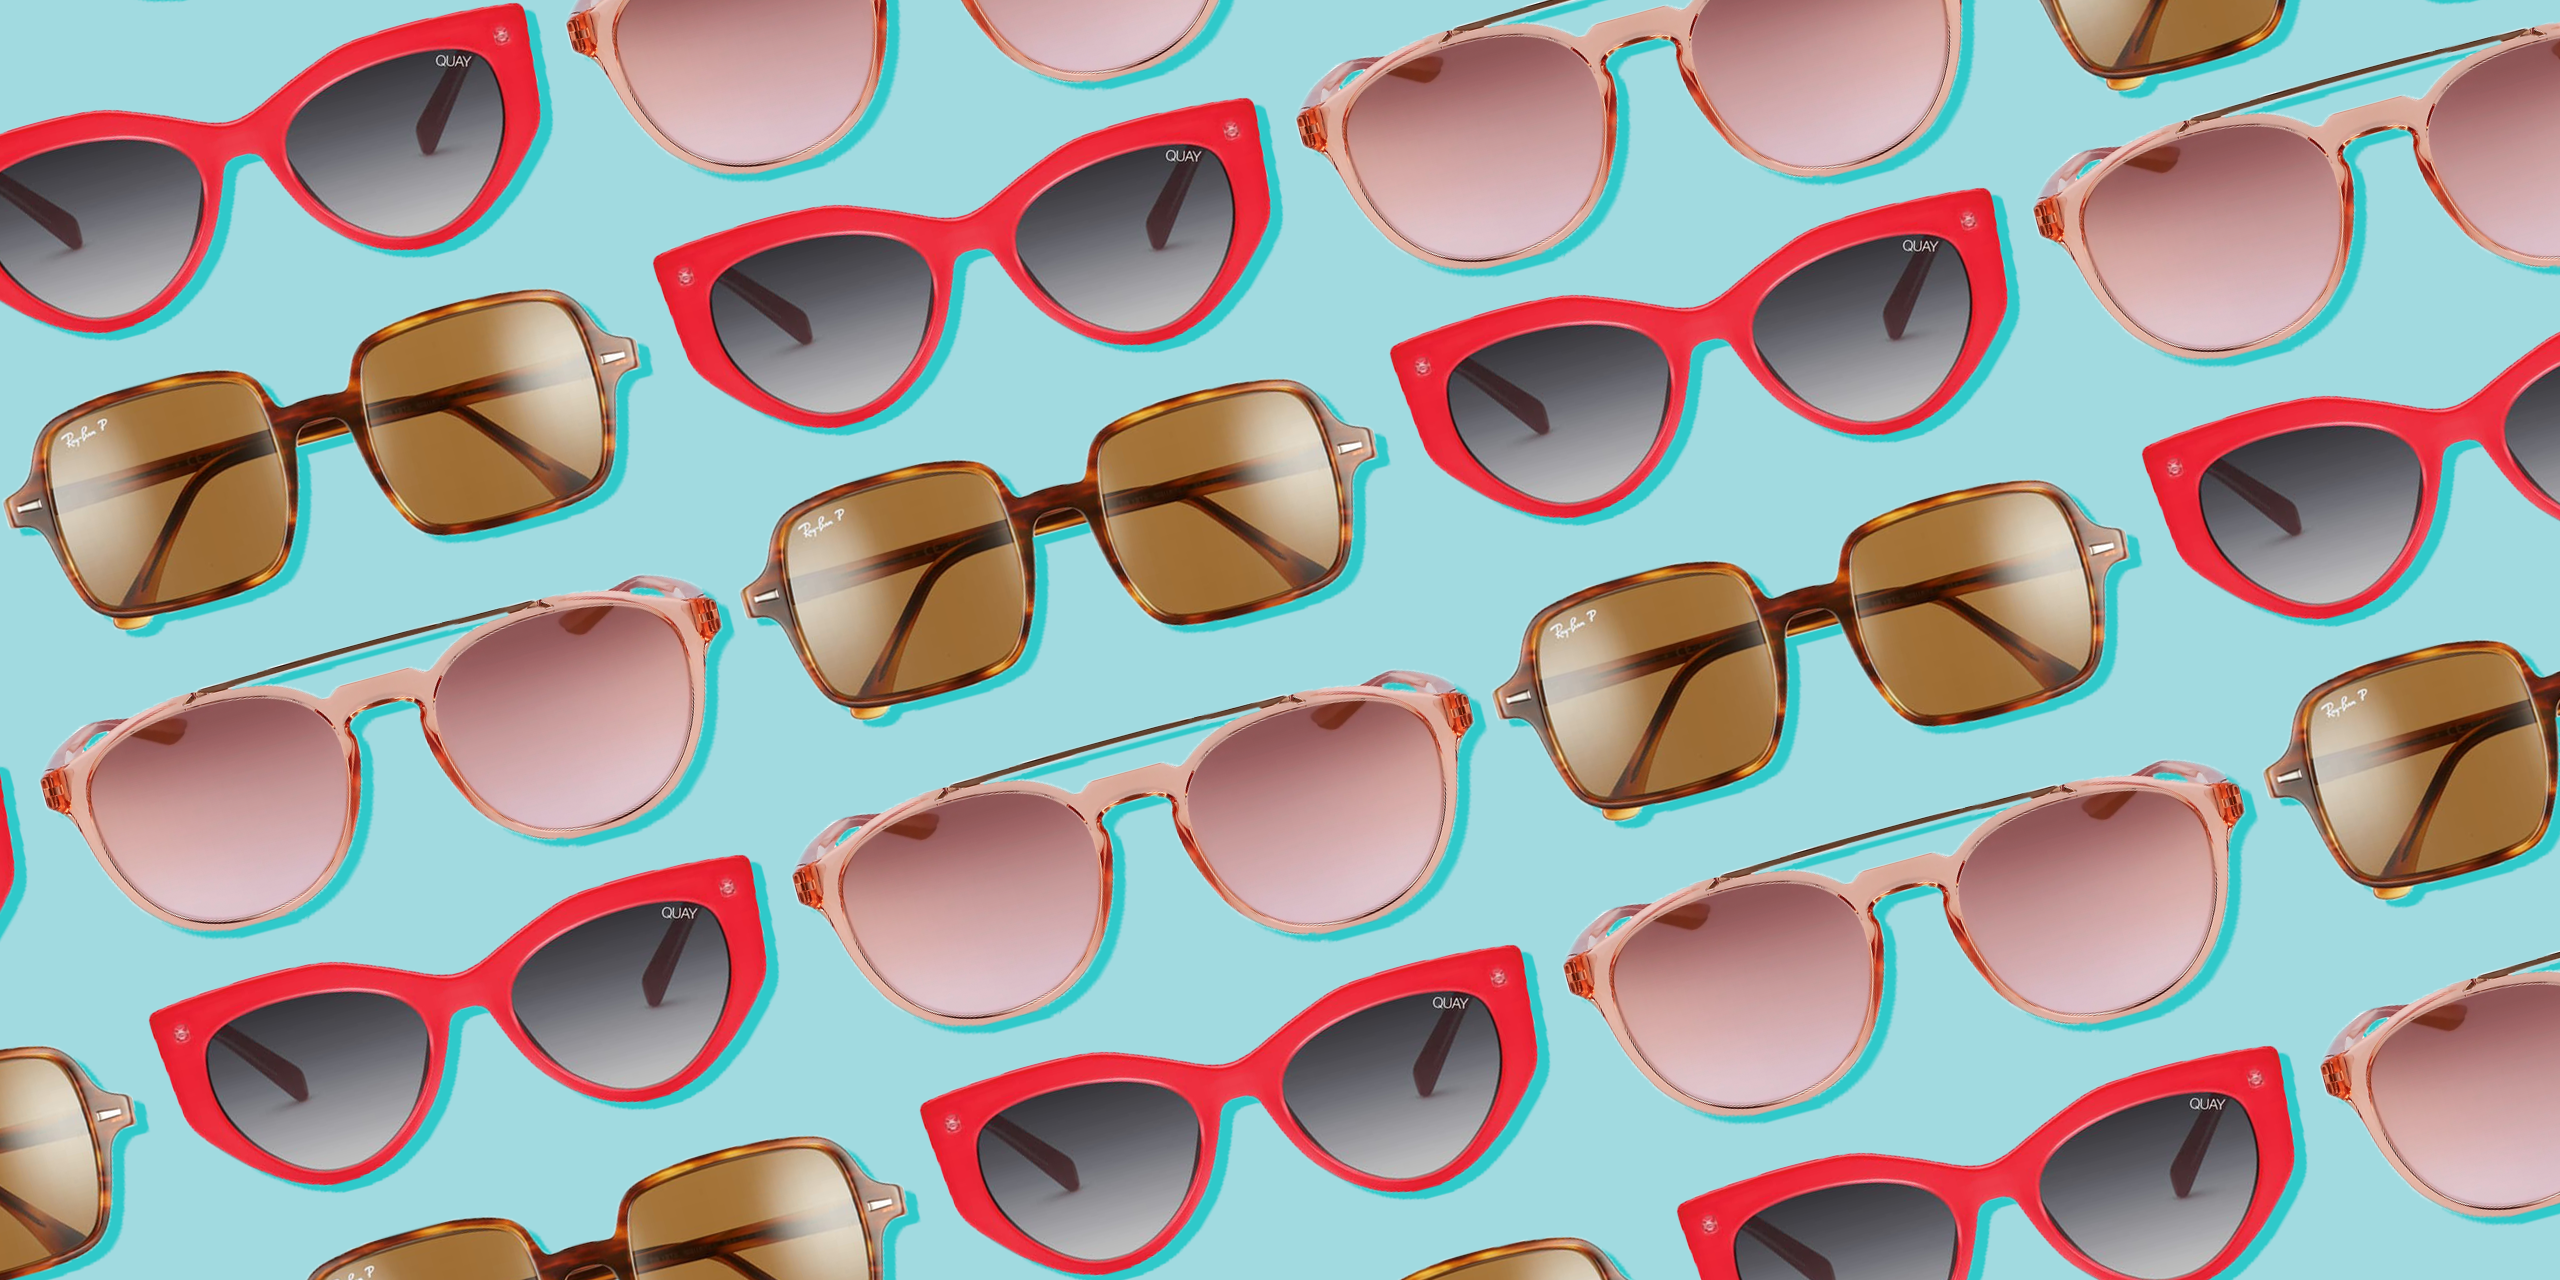 nike women's polarized sunglasses